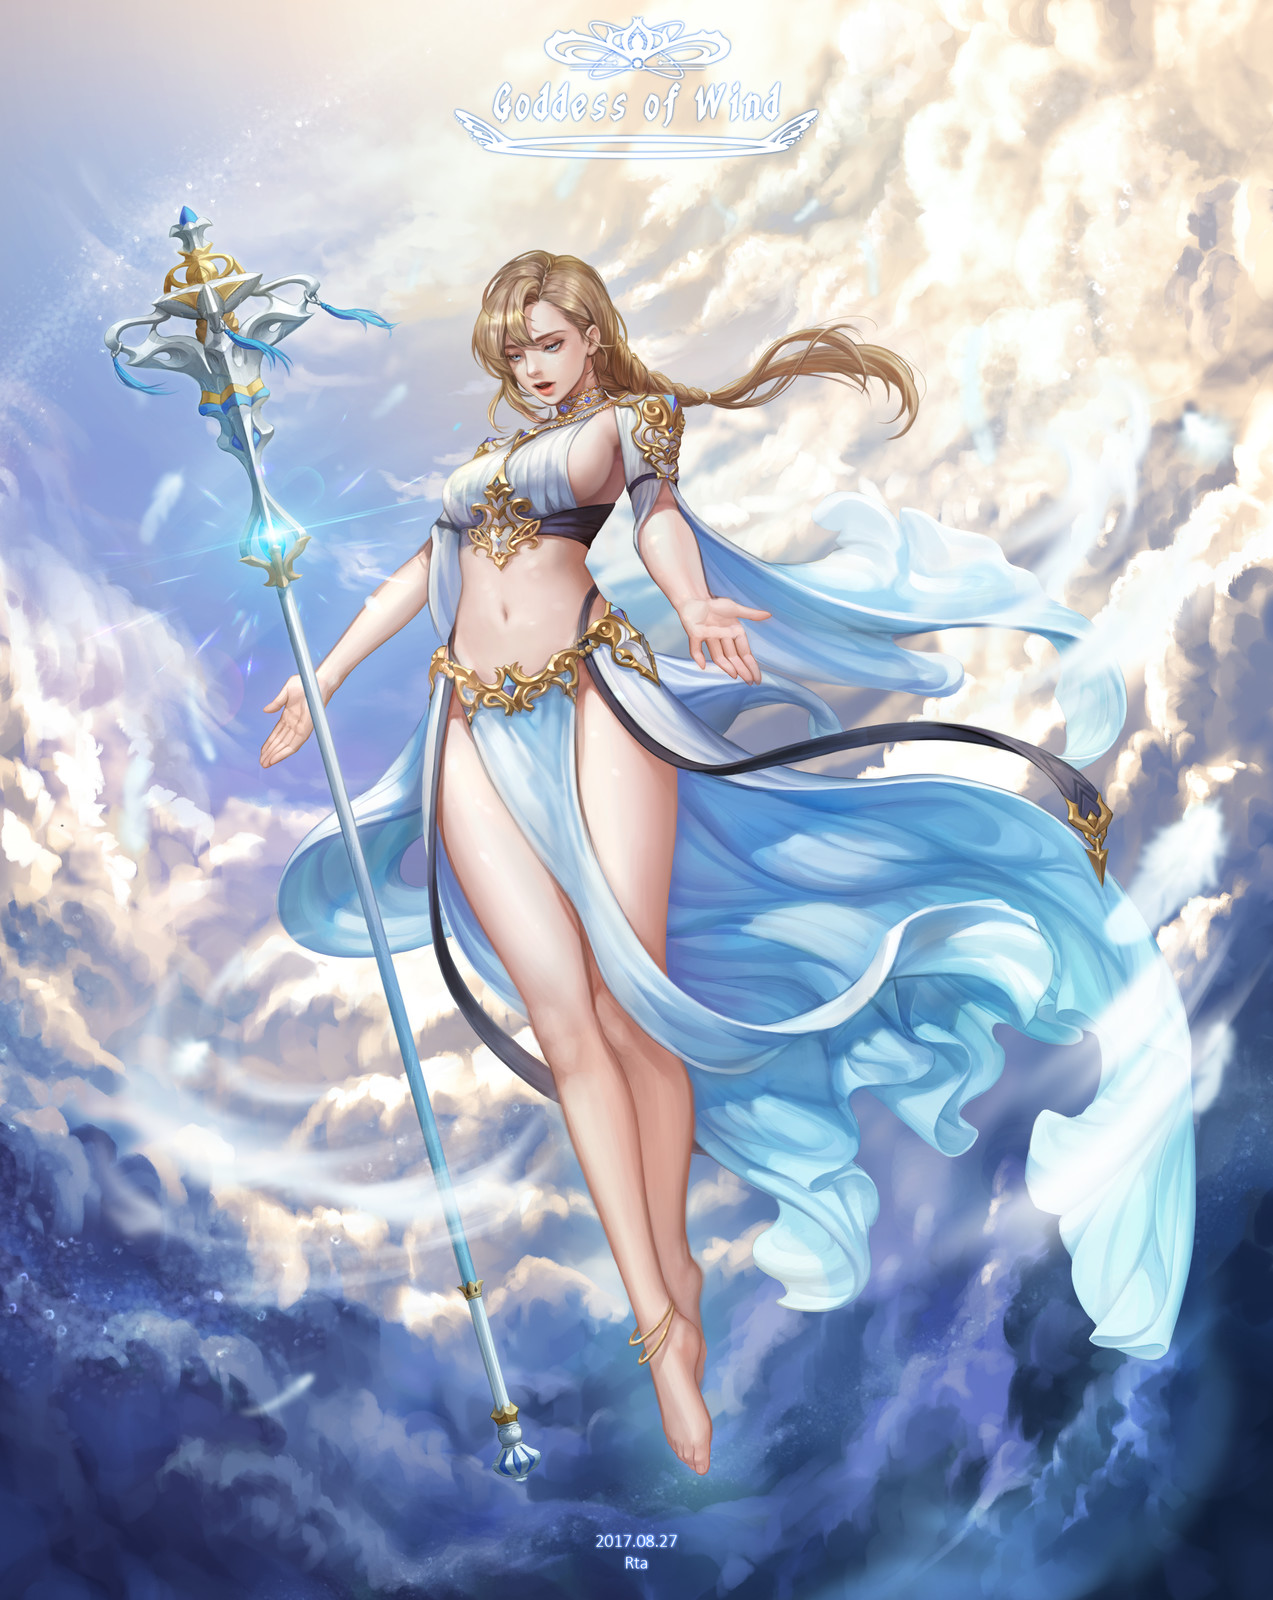 Goddess of Wind.